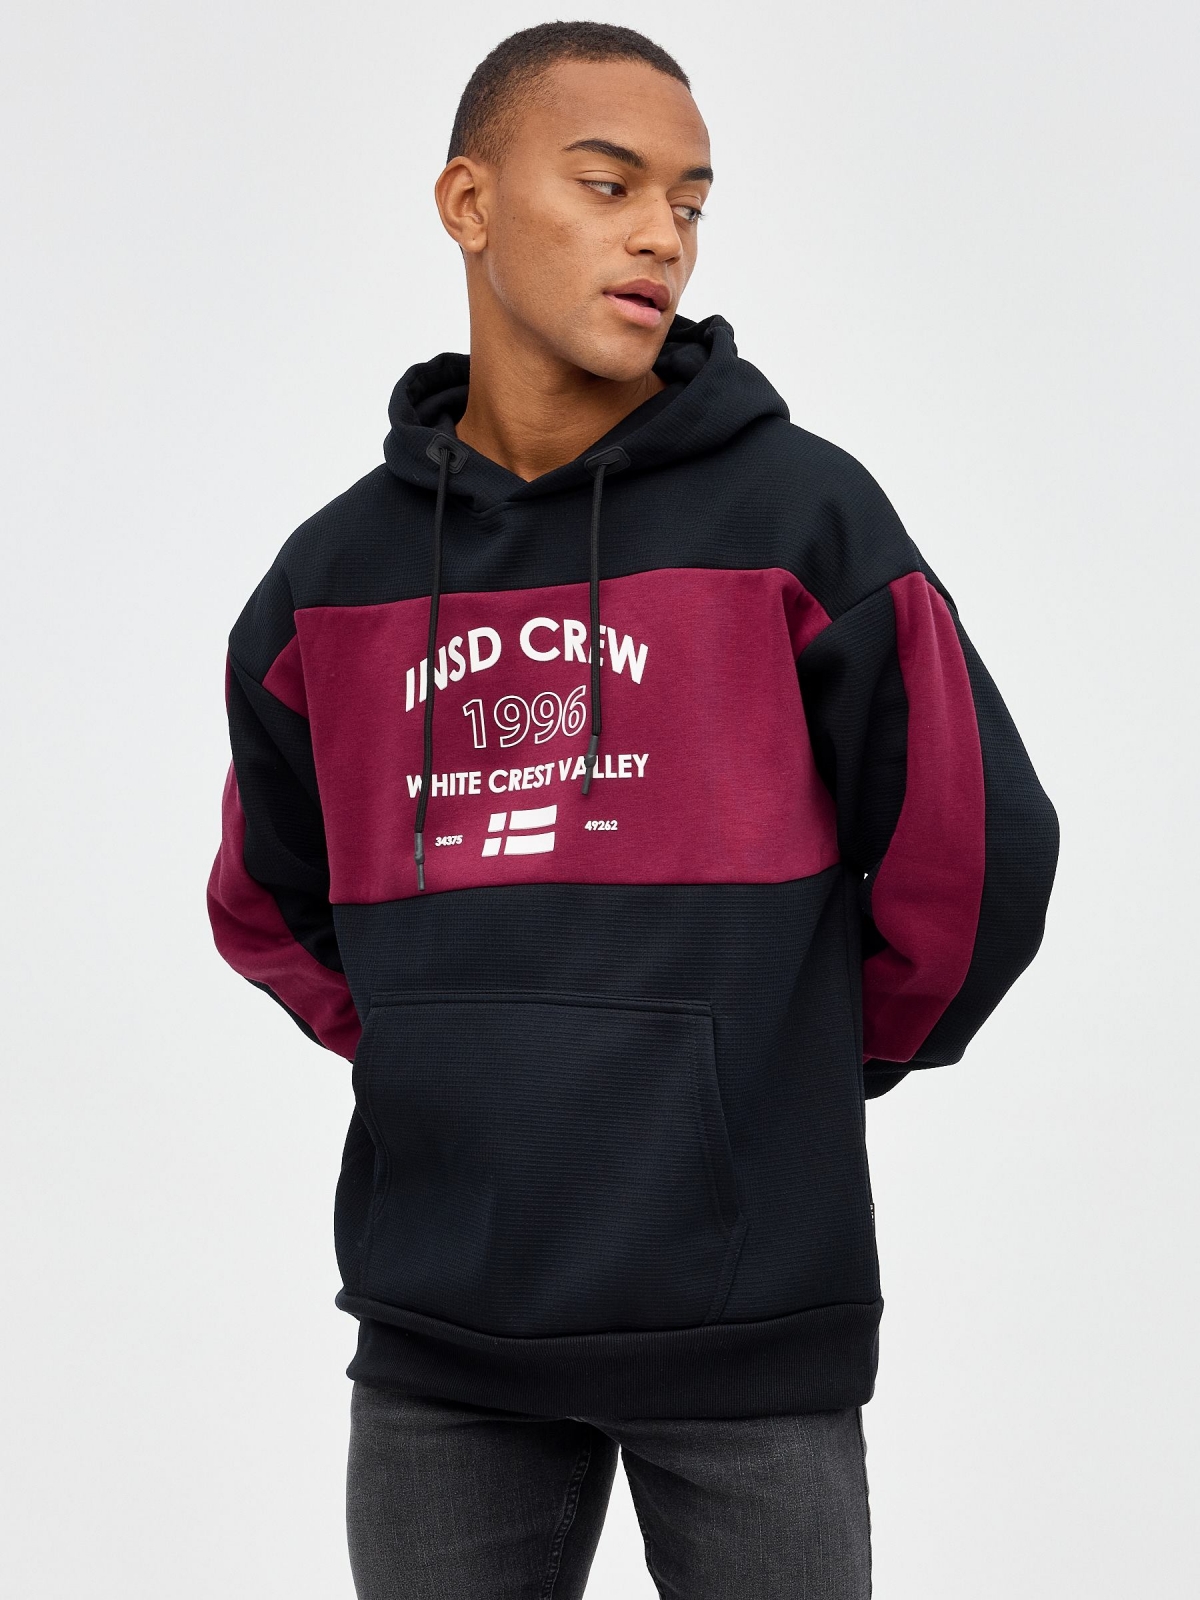 INSD CREW color block sweatshirt black middle front view